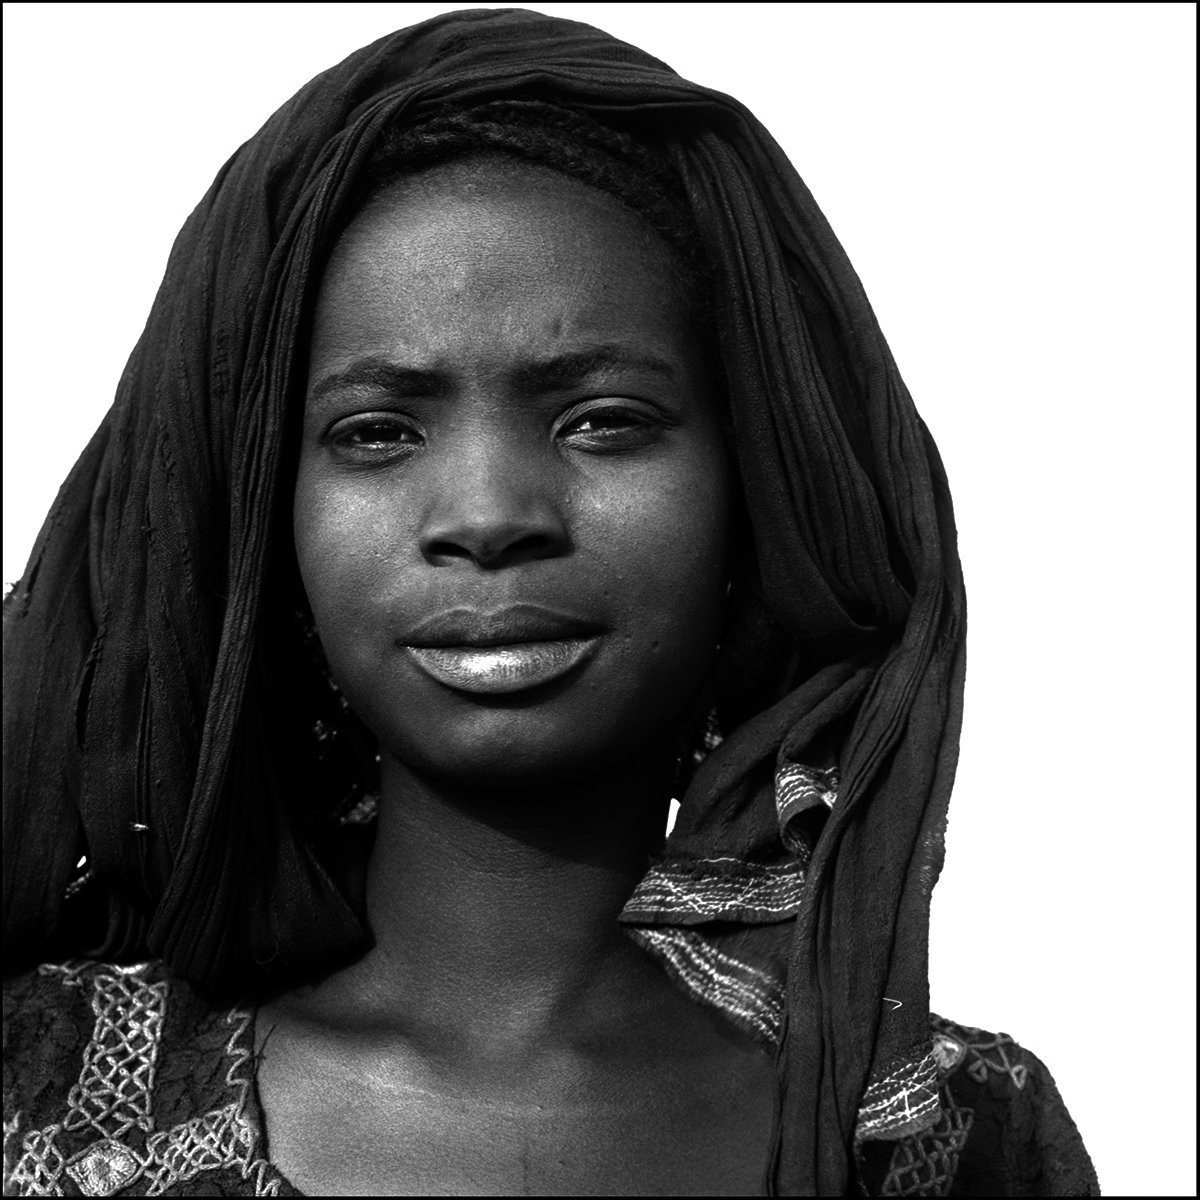 female-portrait-II-niger-2000-2001-photo-morten-krogvold.jpg